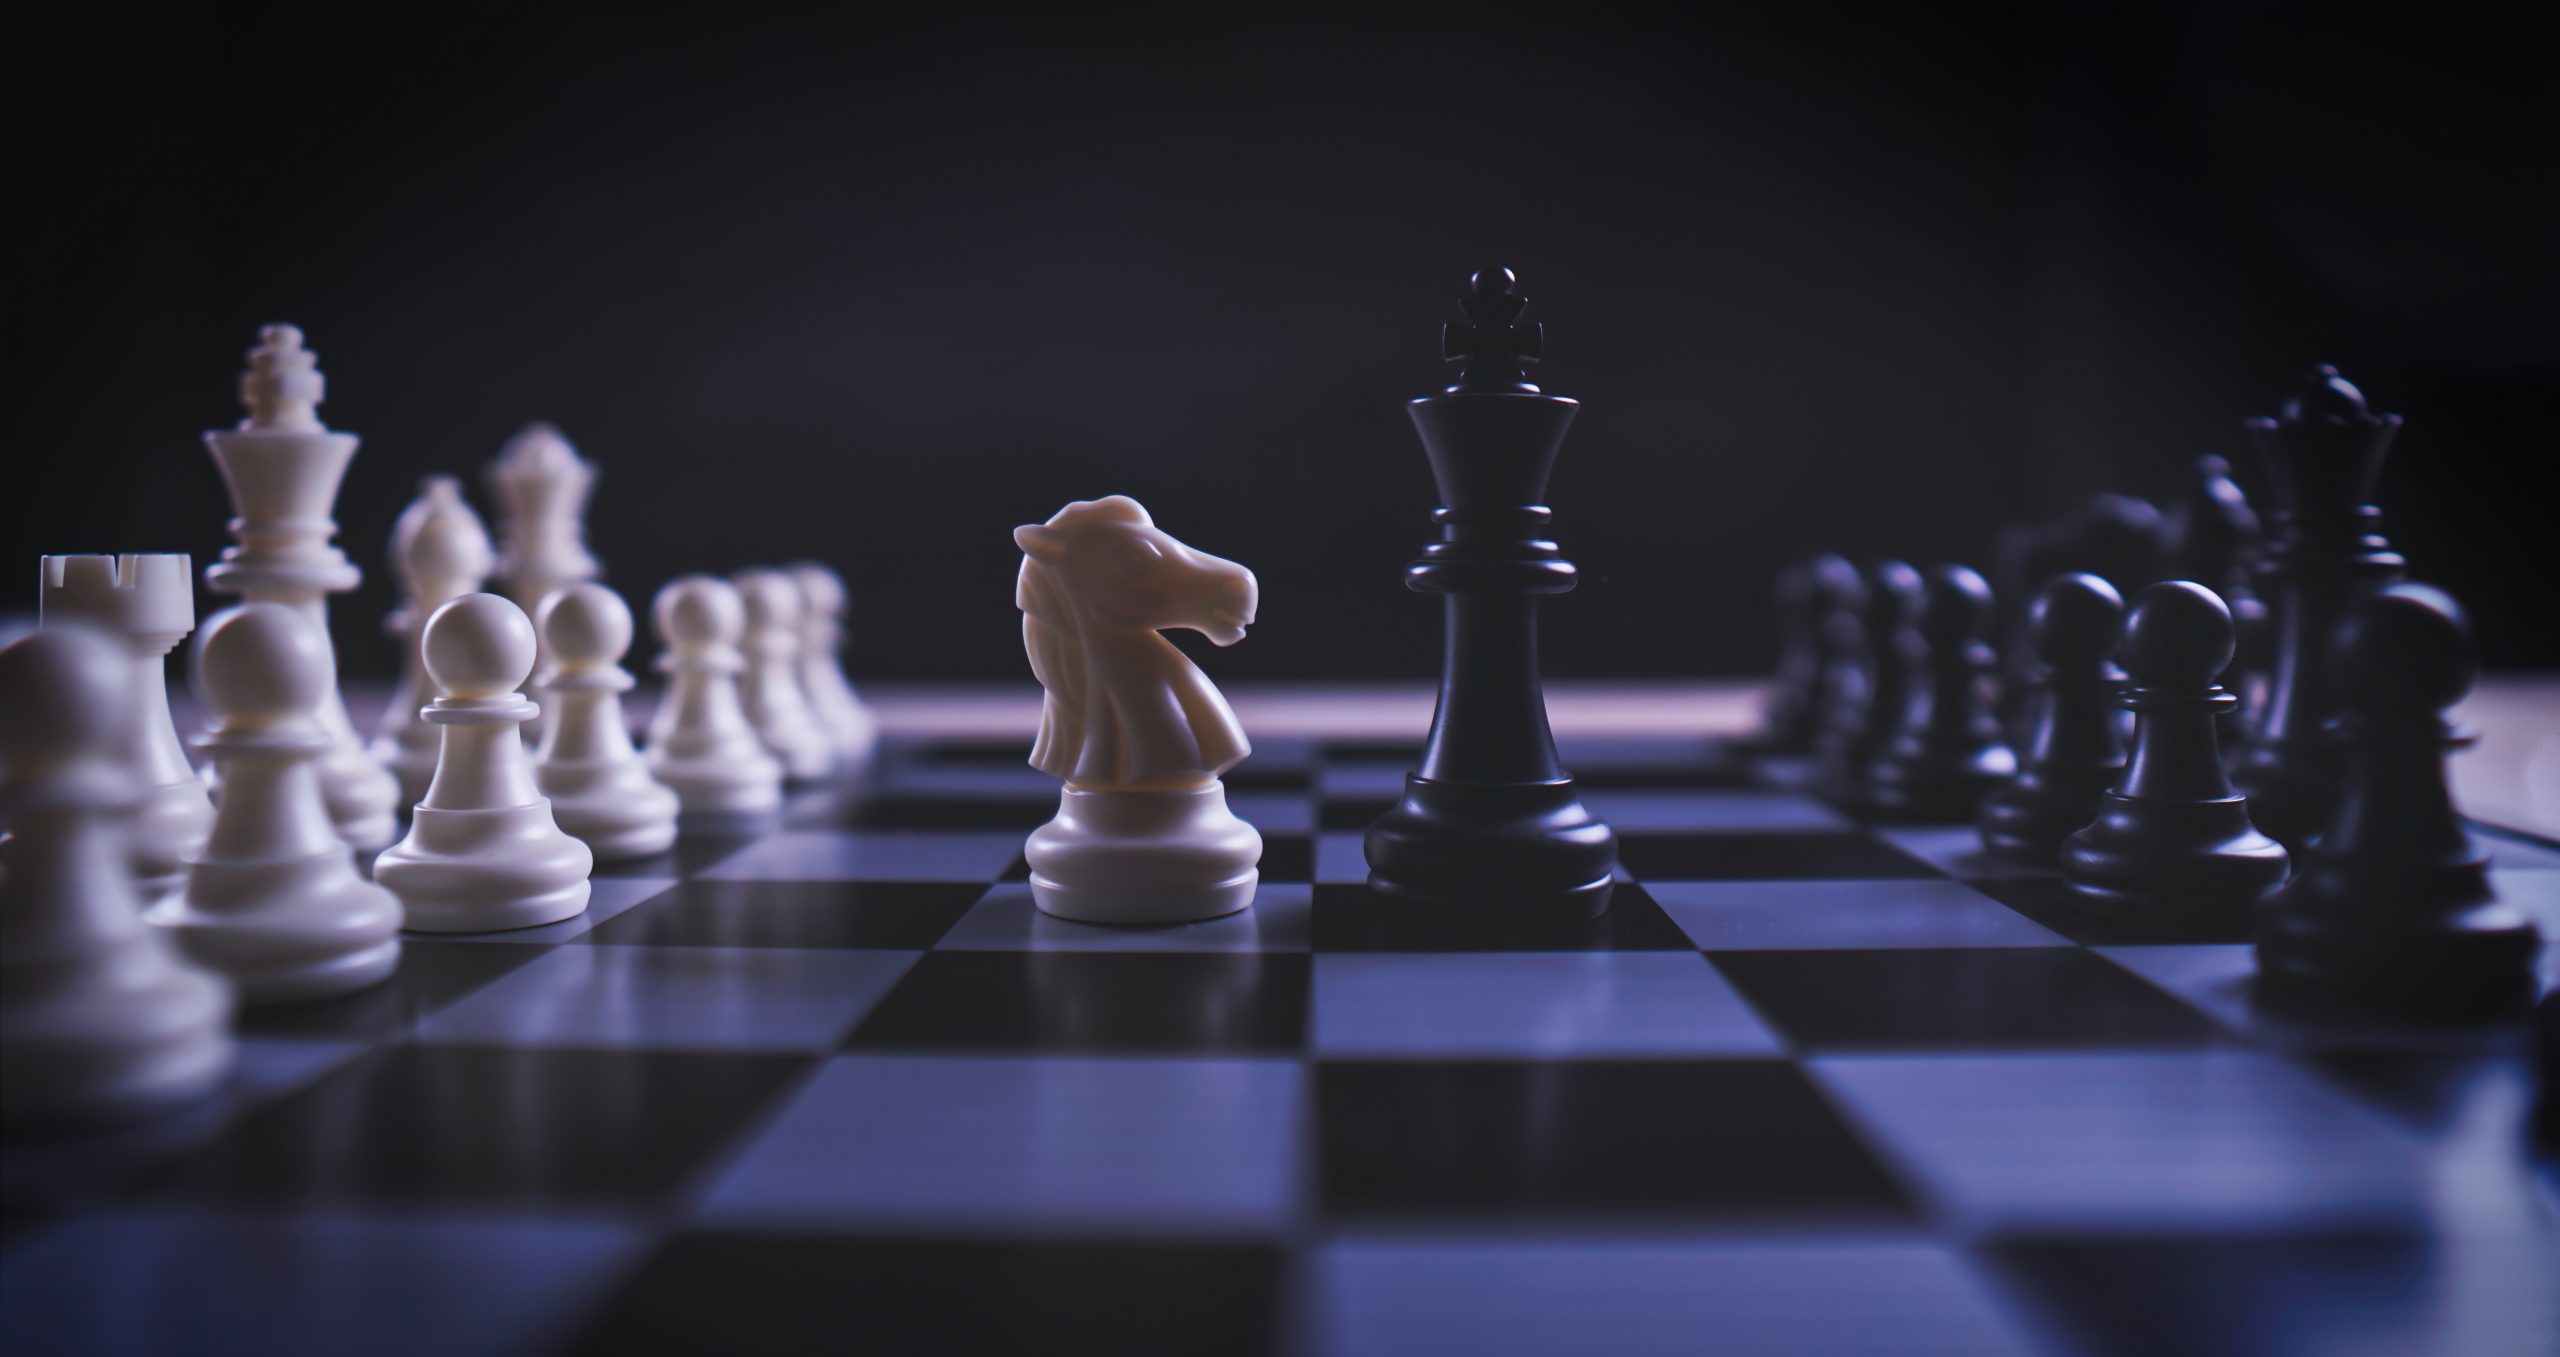 Simple & Useful Method to Avoid BLUNDERS in Chess 